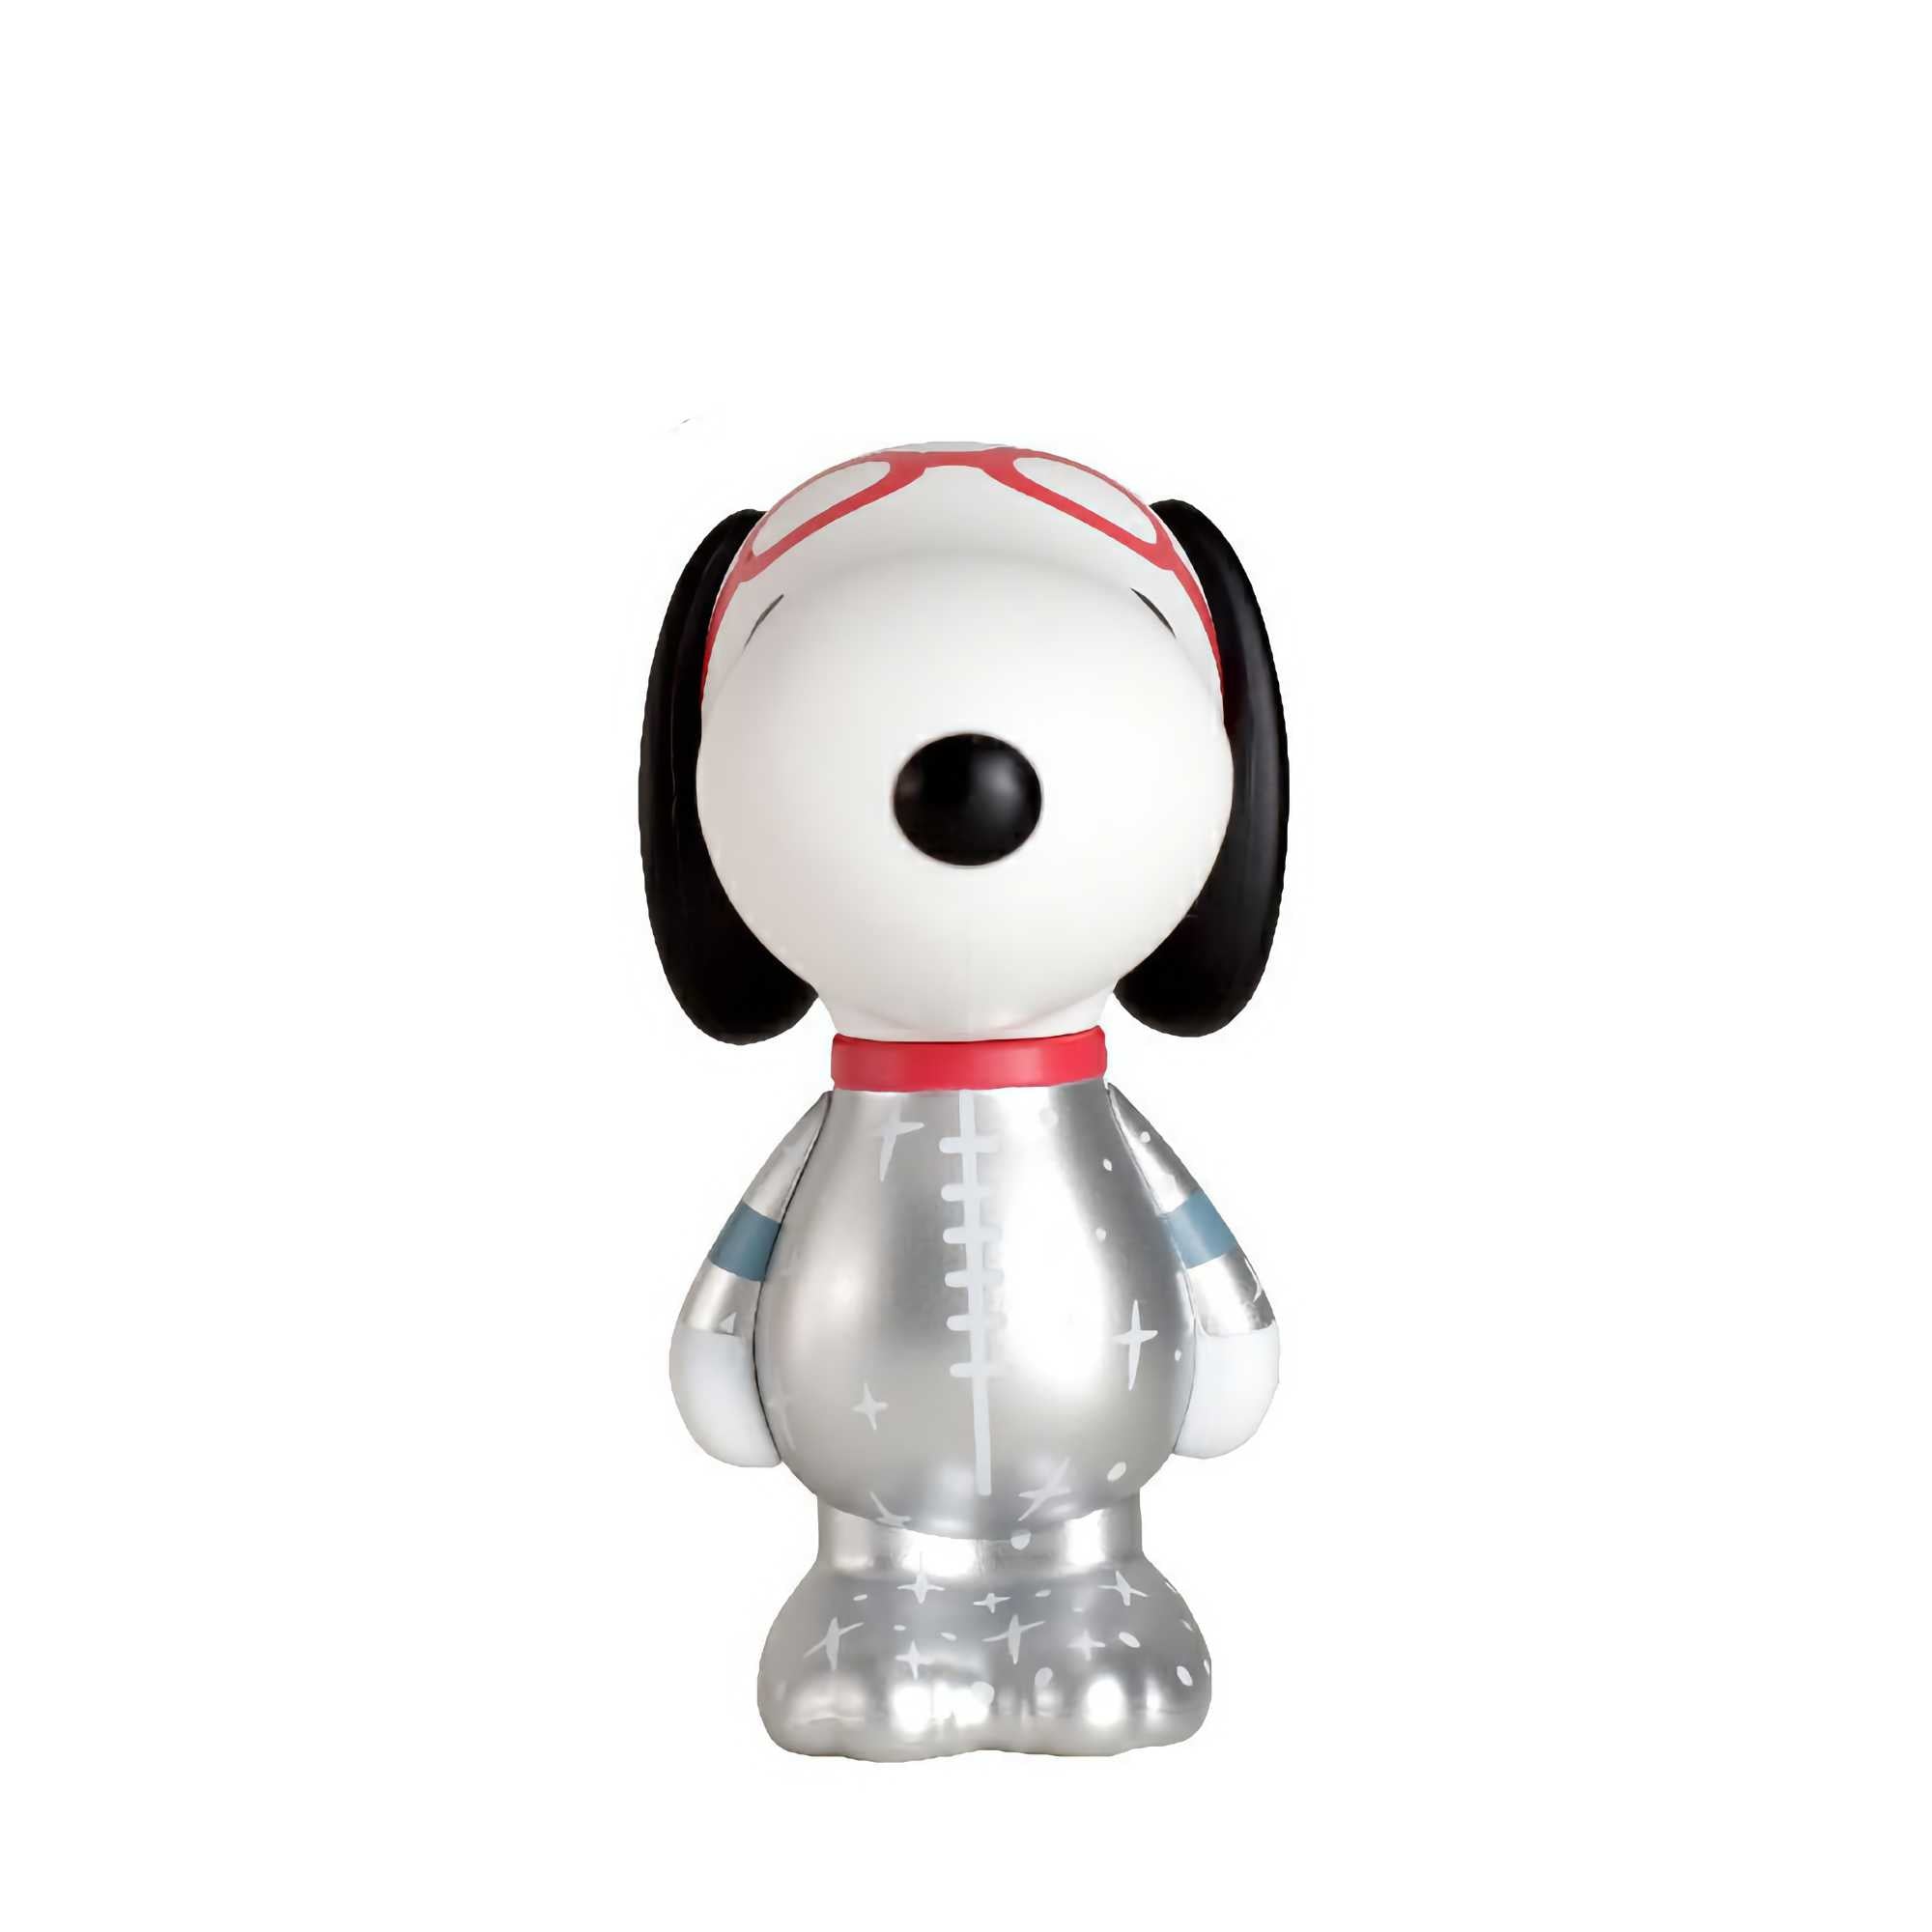 Snoopy Astronaut Grow in Dark figure